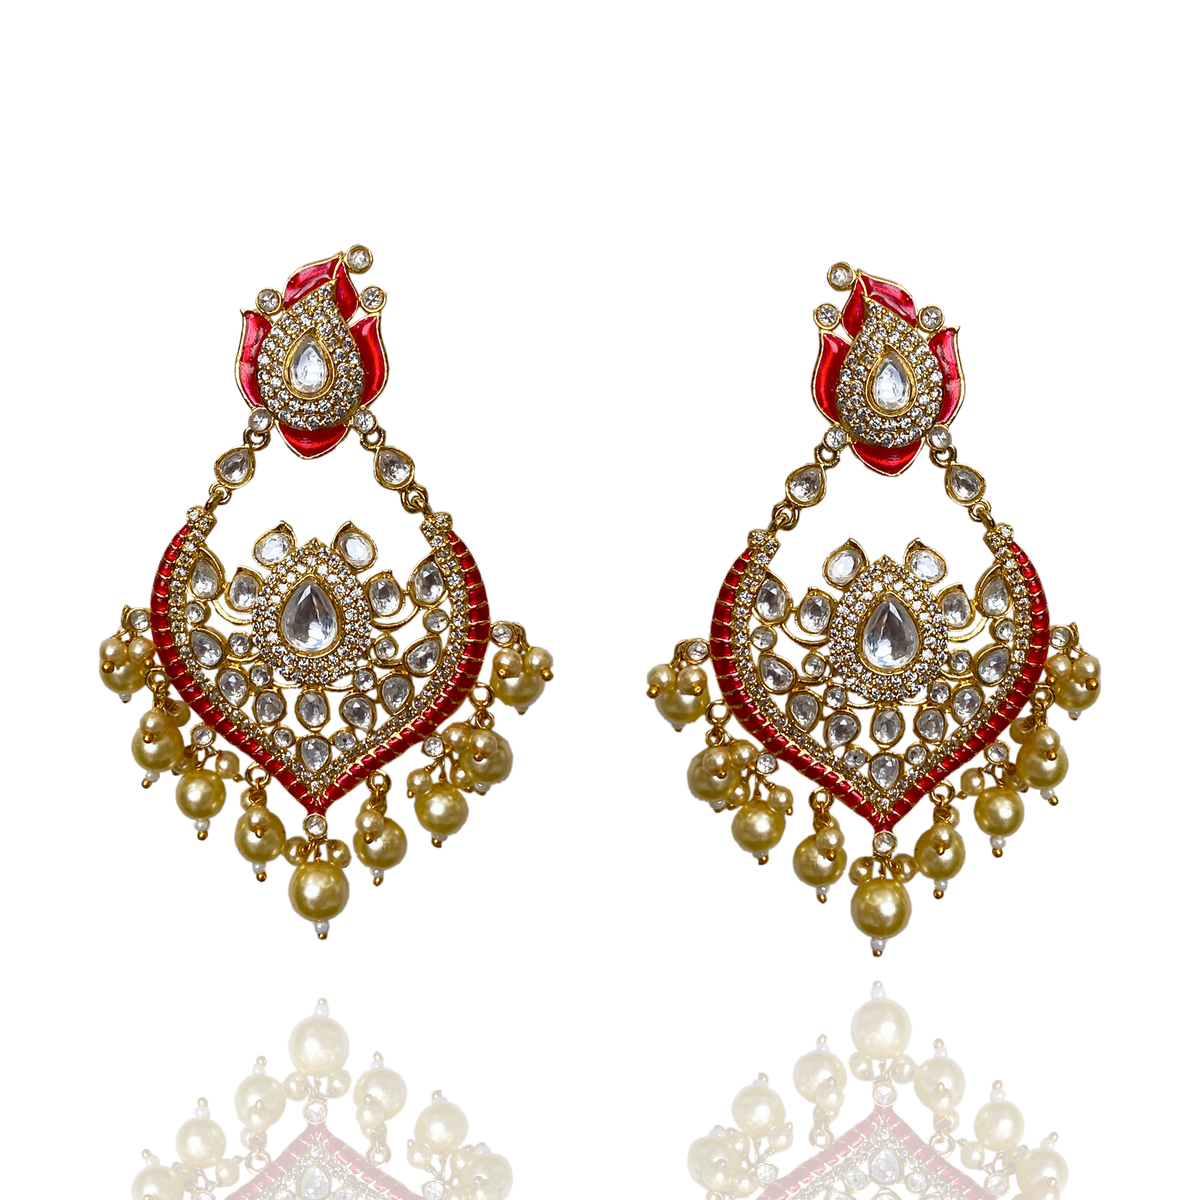 new gold earrings tops 5gm design jewellery @jodhpuri_jewellery - YouTube